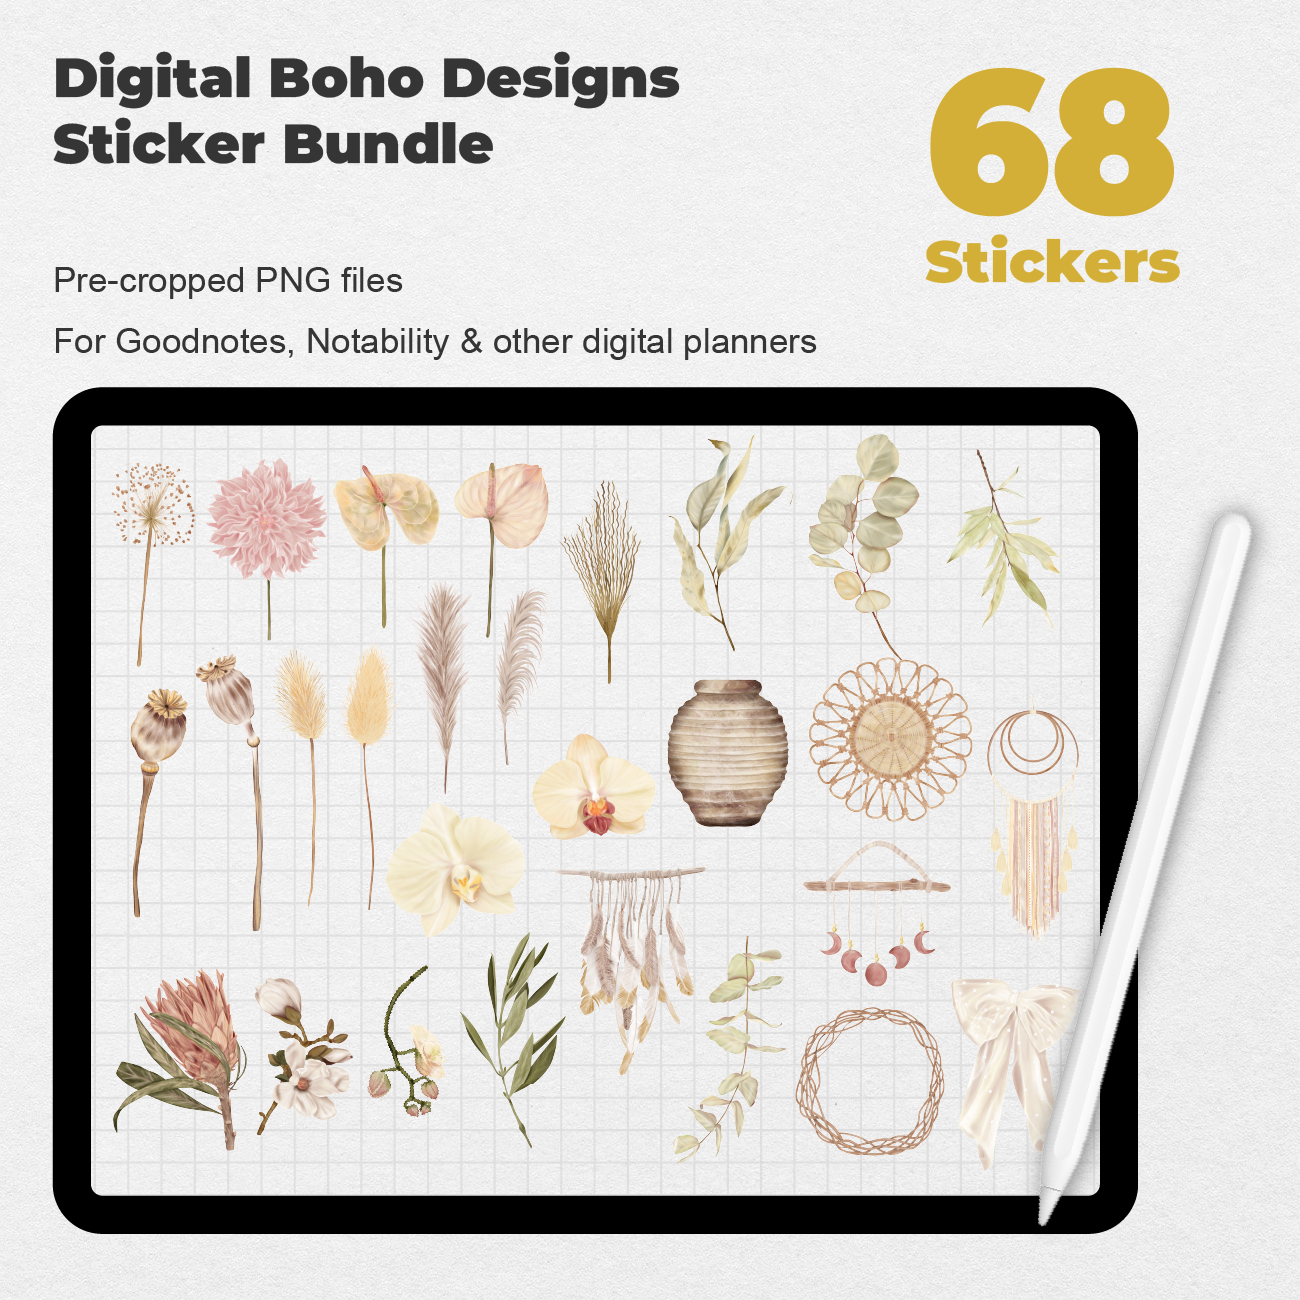 450 Digital Stickers, Boho stickers set, goodnotes sticker book, Cute  Planner Stickers, stickers pack 963904106 - Buy t-shirt designs